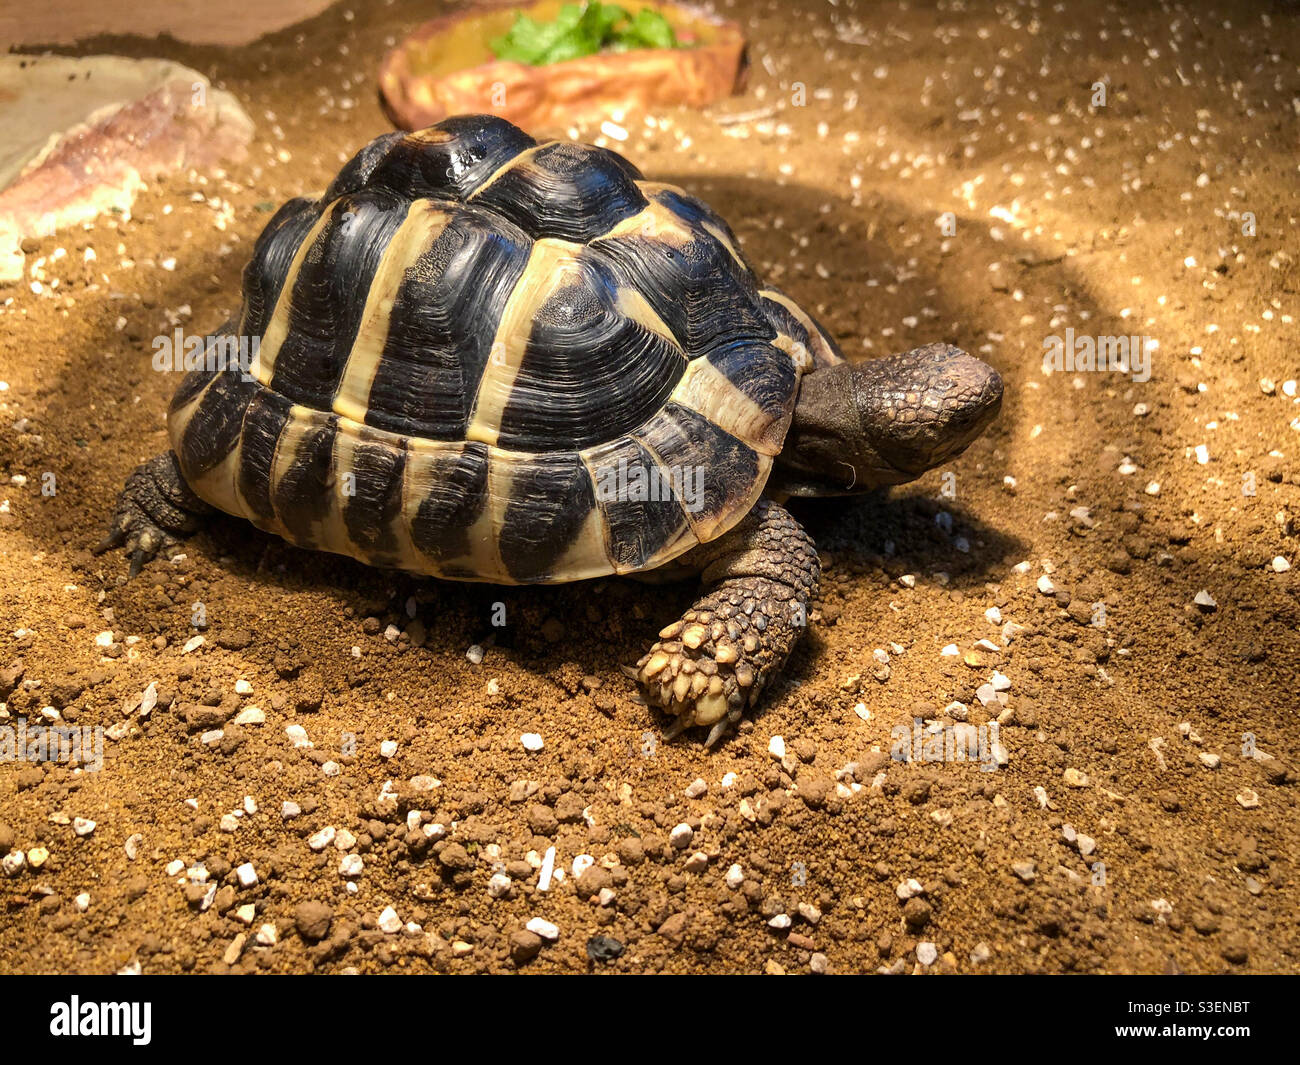 Tartaruga in PET hermann crogiolarsi alla luce di una lampada a bastone. Foto Stock